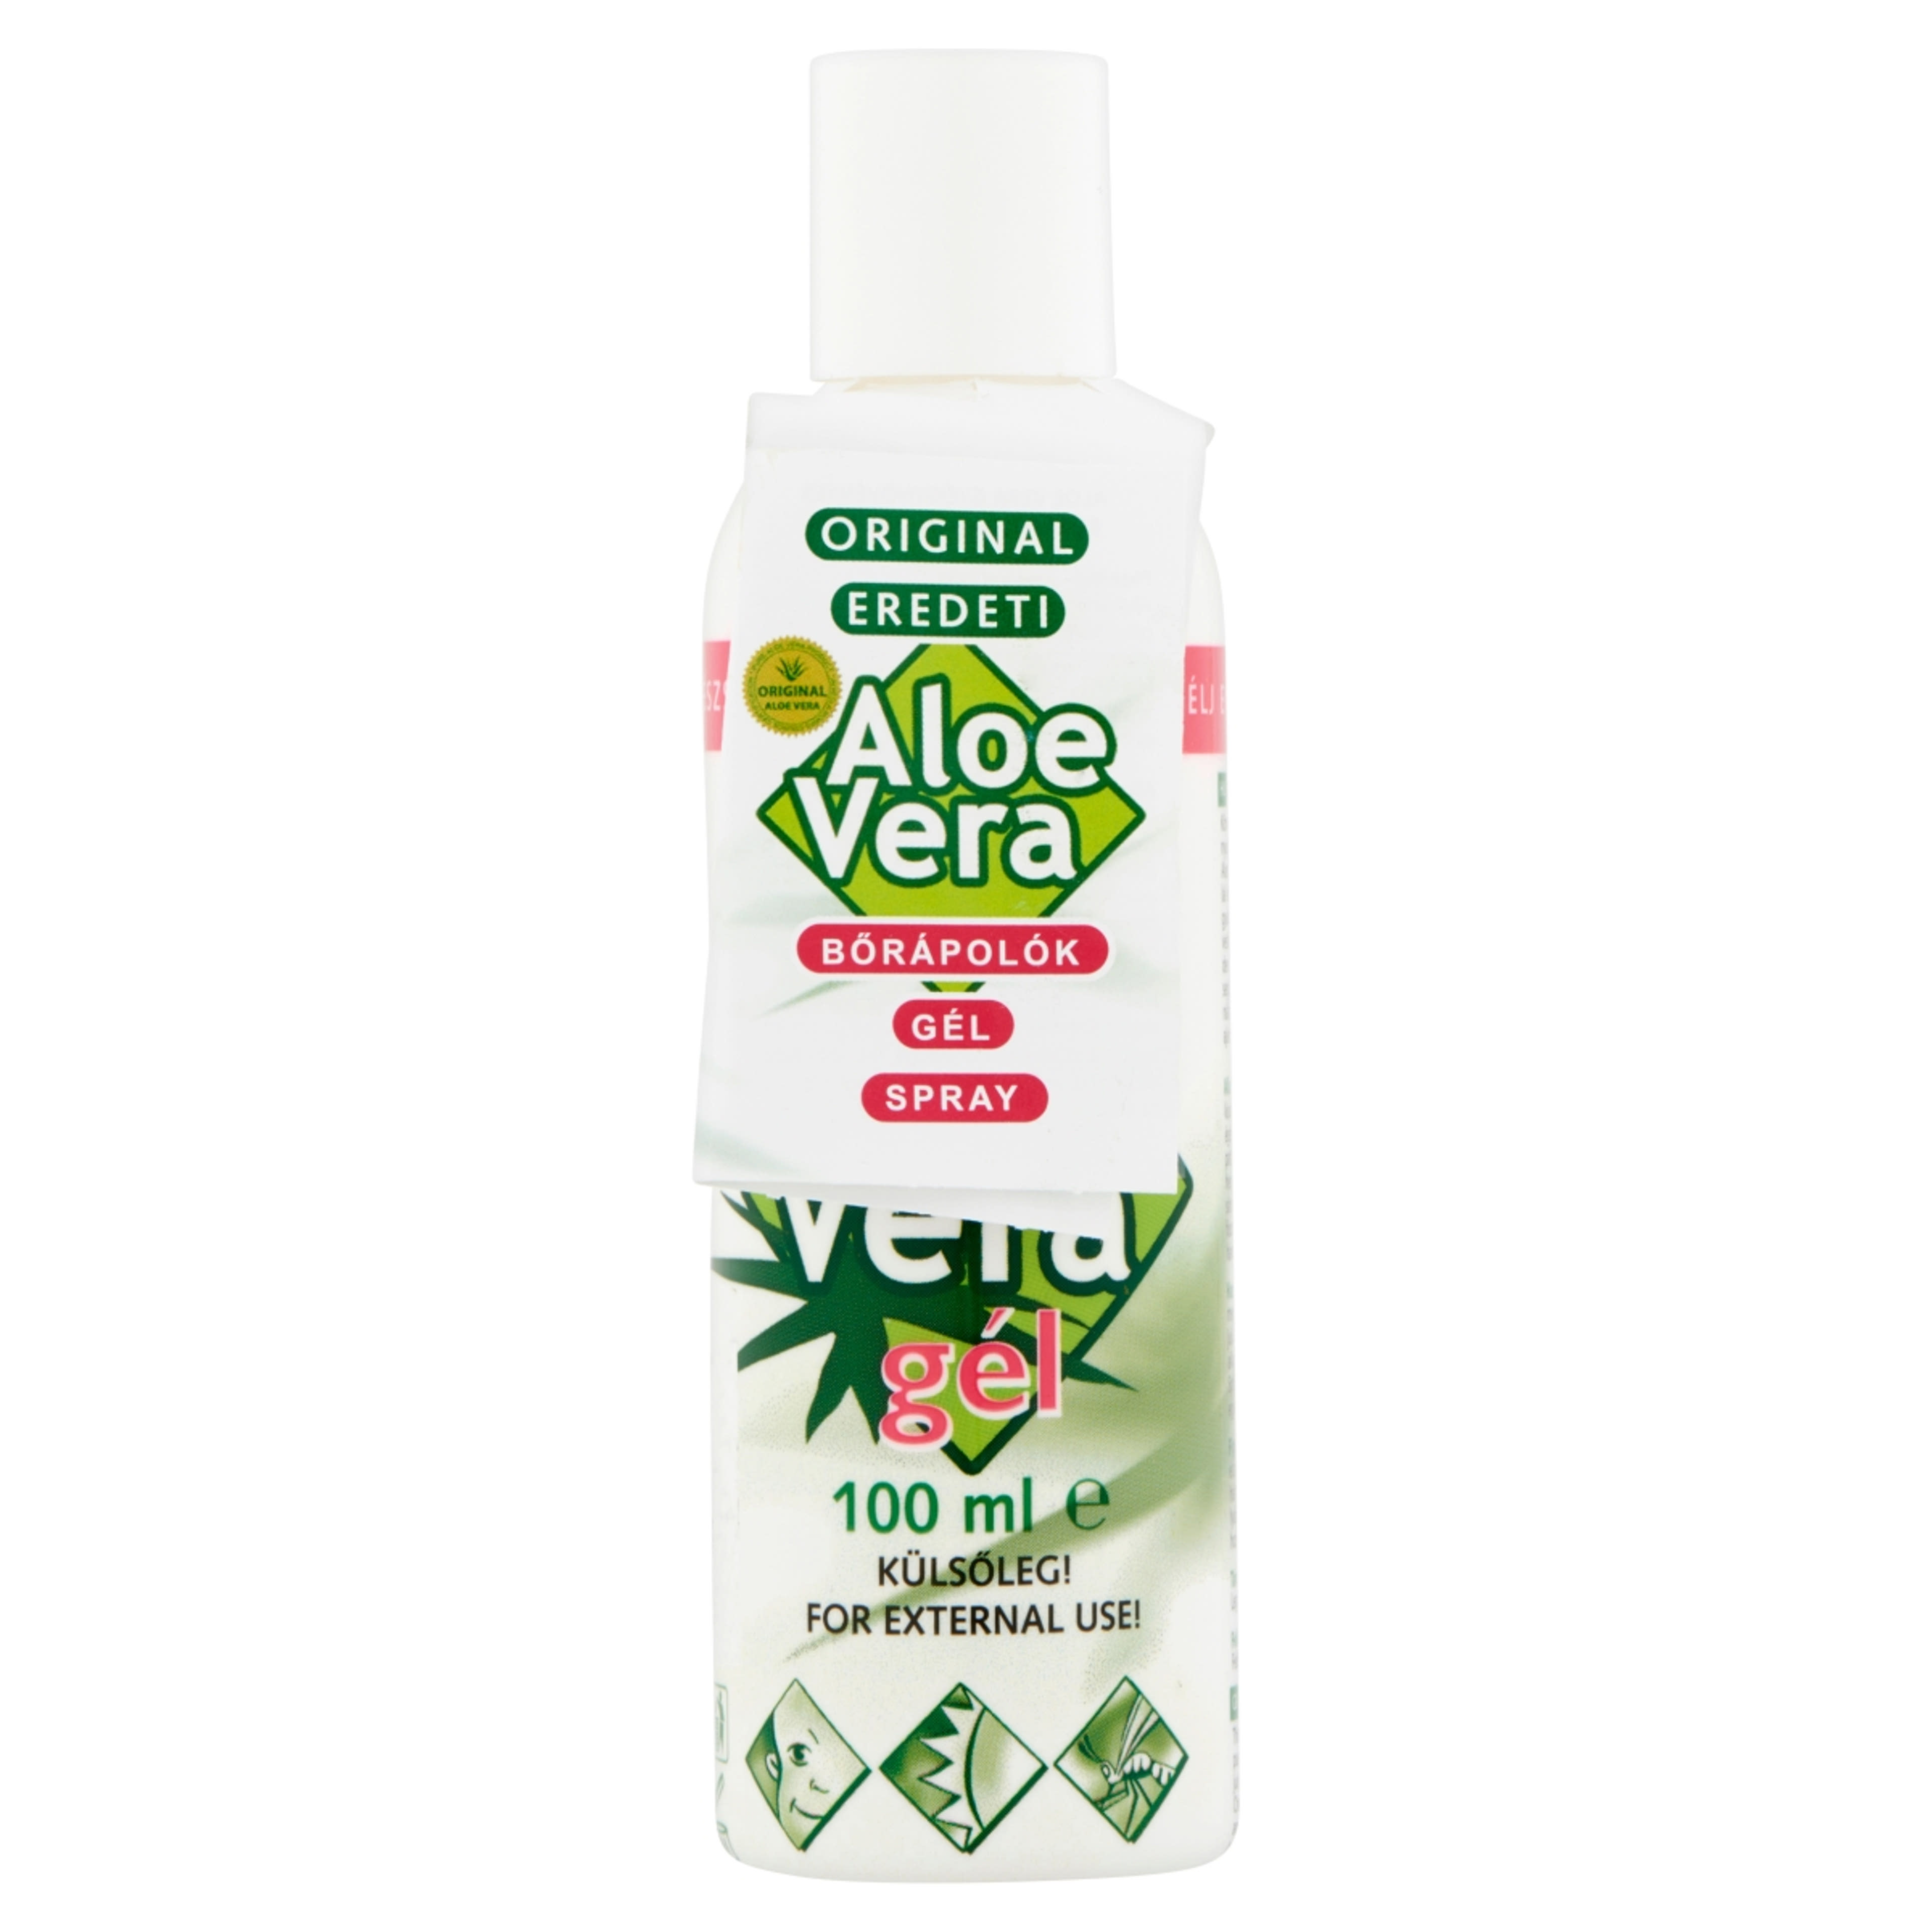 Eredeti Aloe Vera gél - 100 ml-1